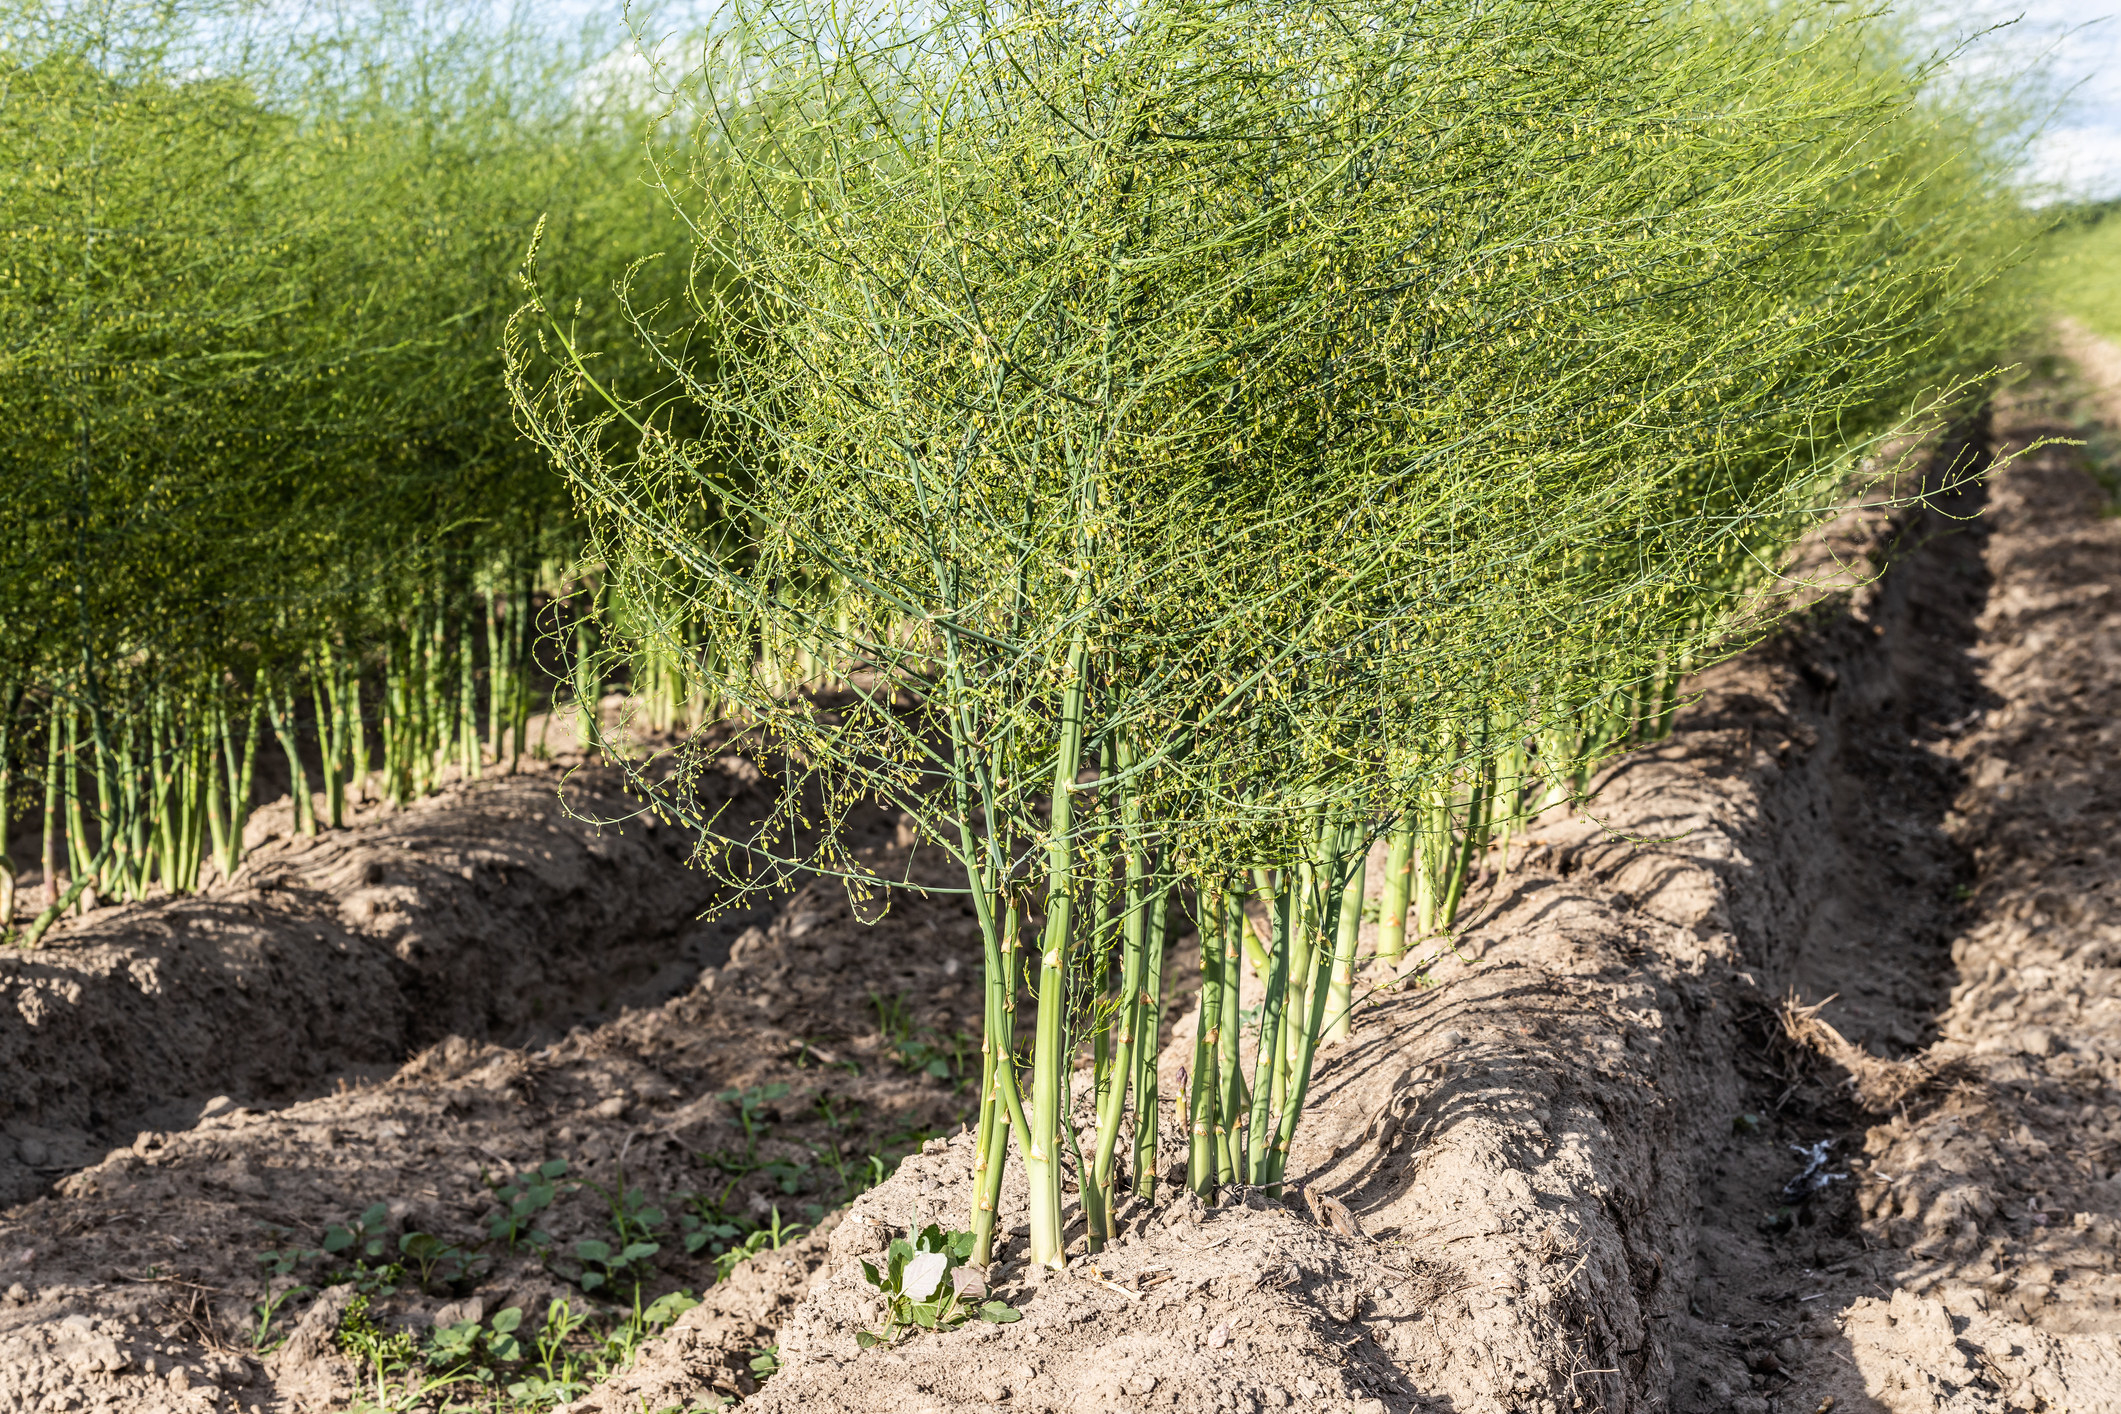 An asparagus field